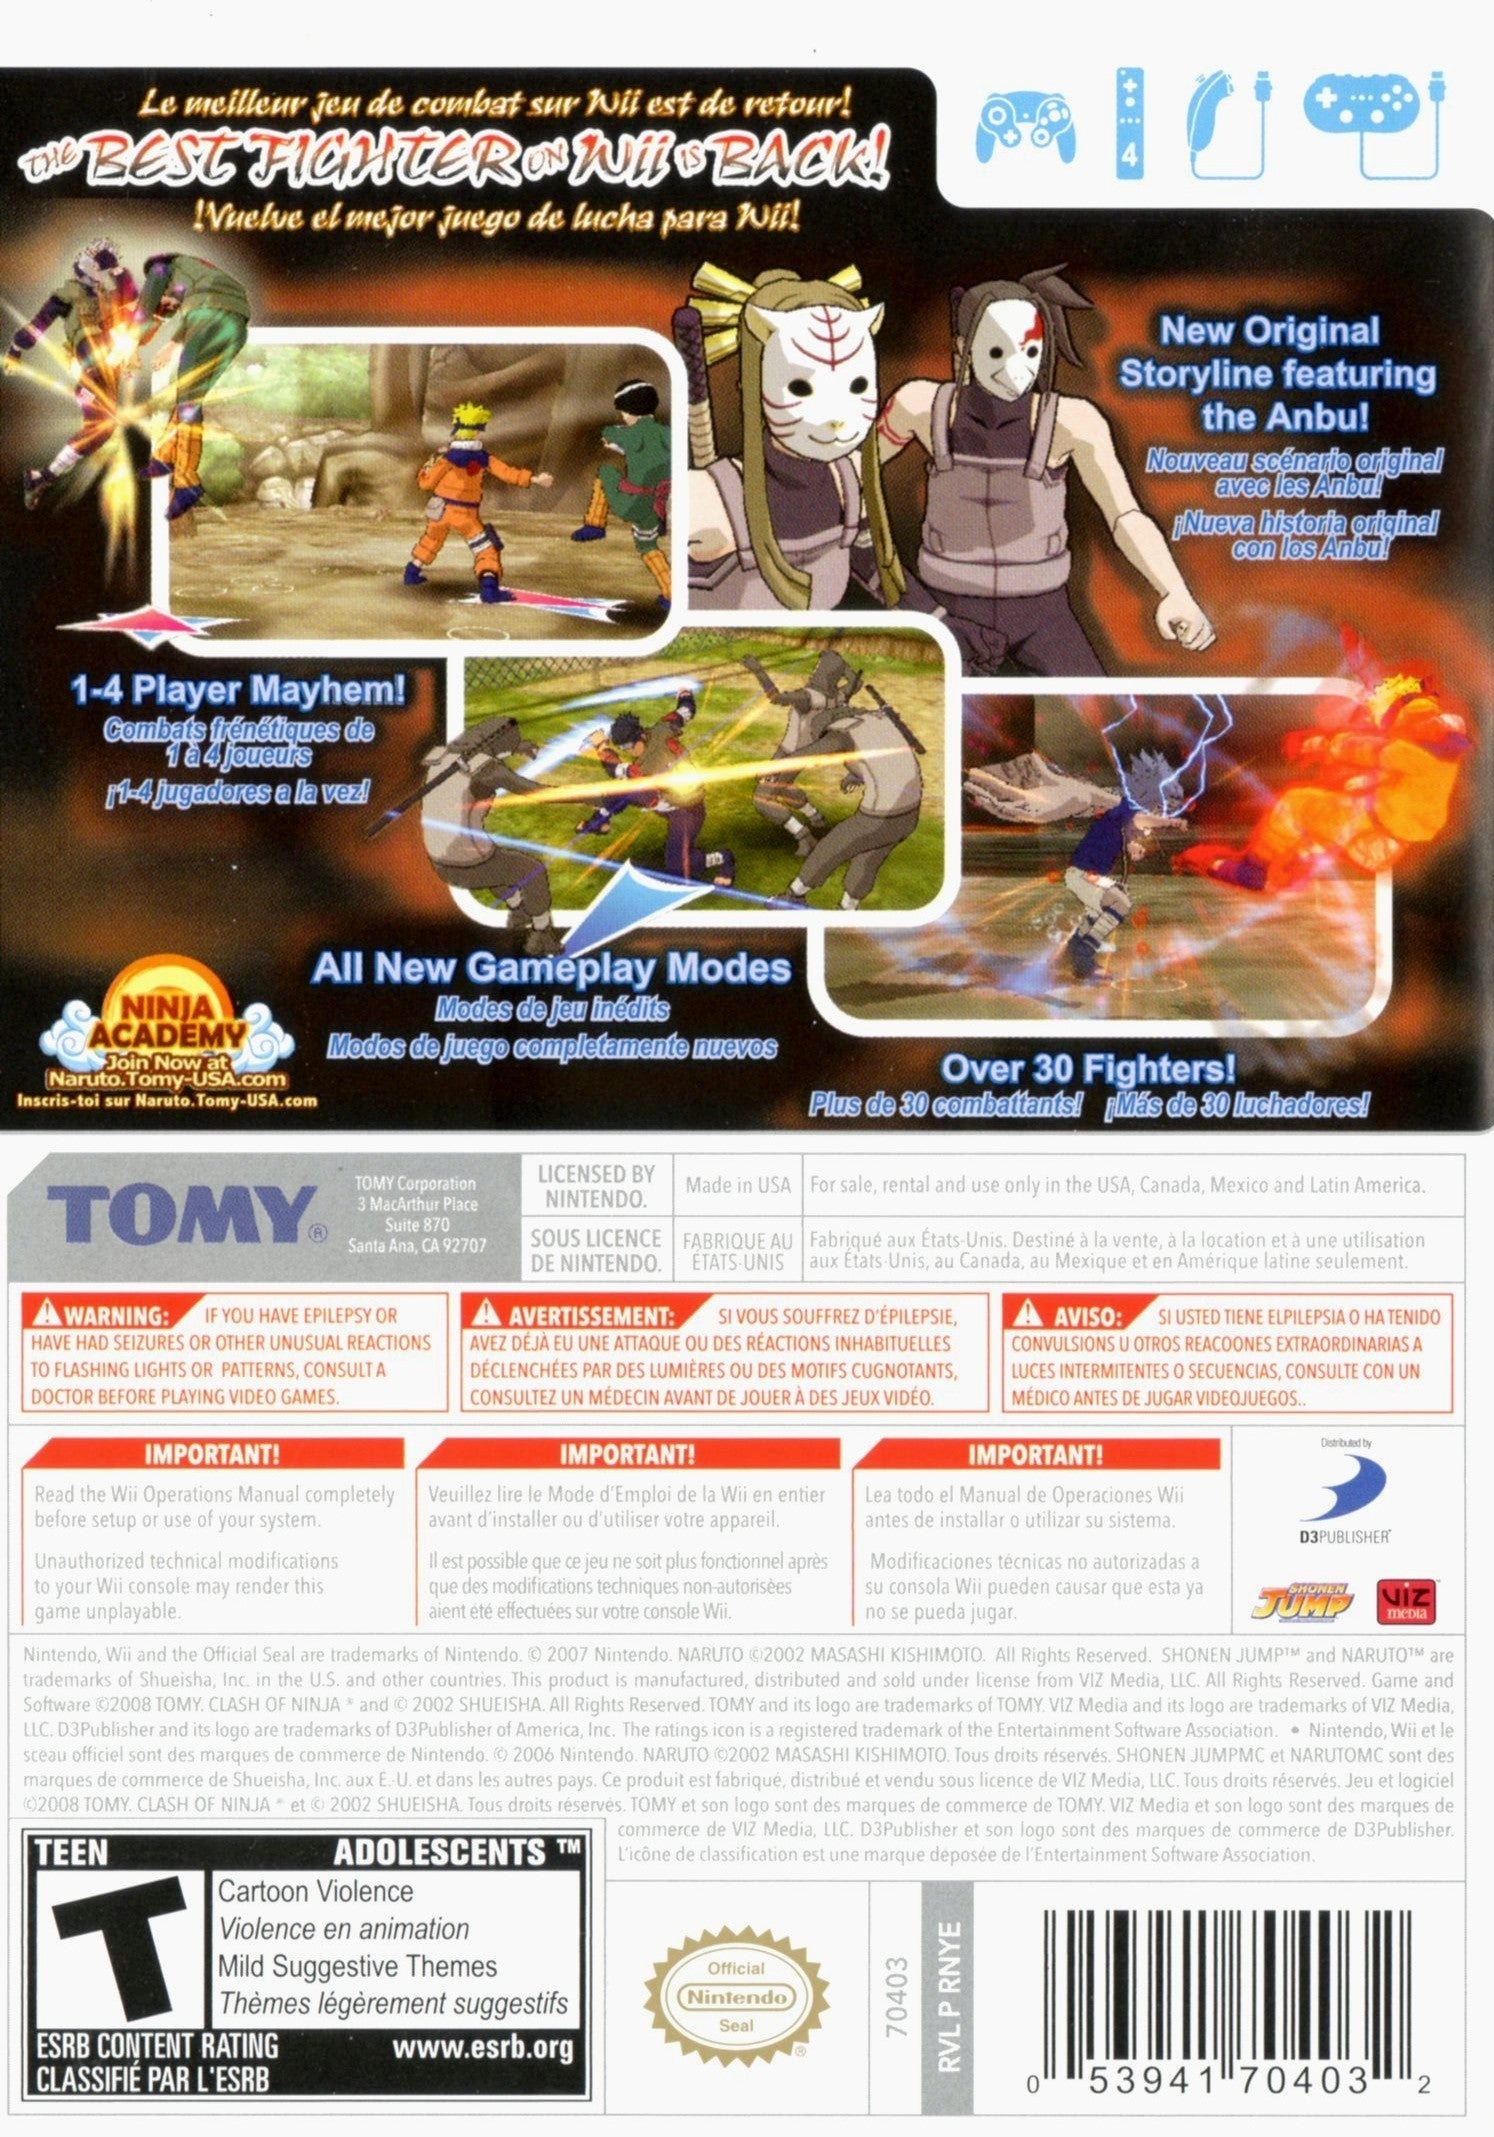 Naruto: Clash of Ninja Revolution 2 - Nintendo Wii Game